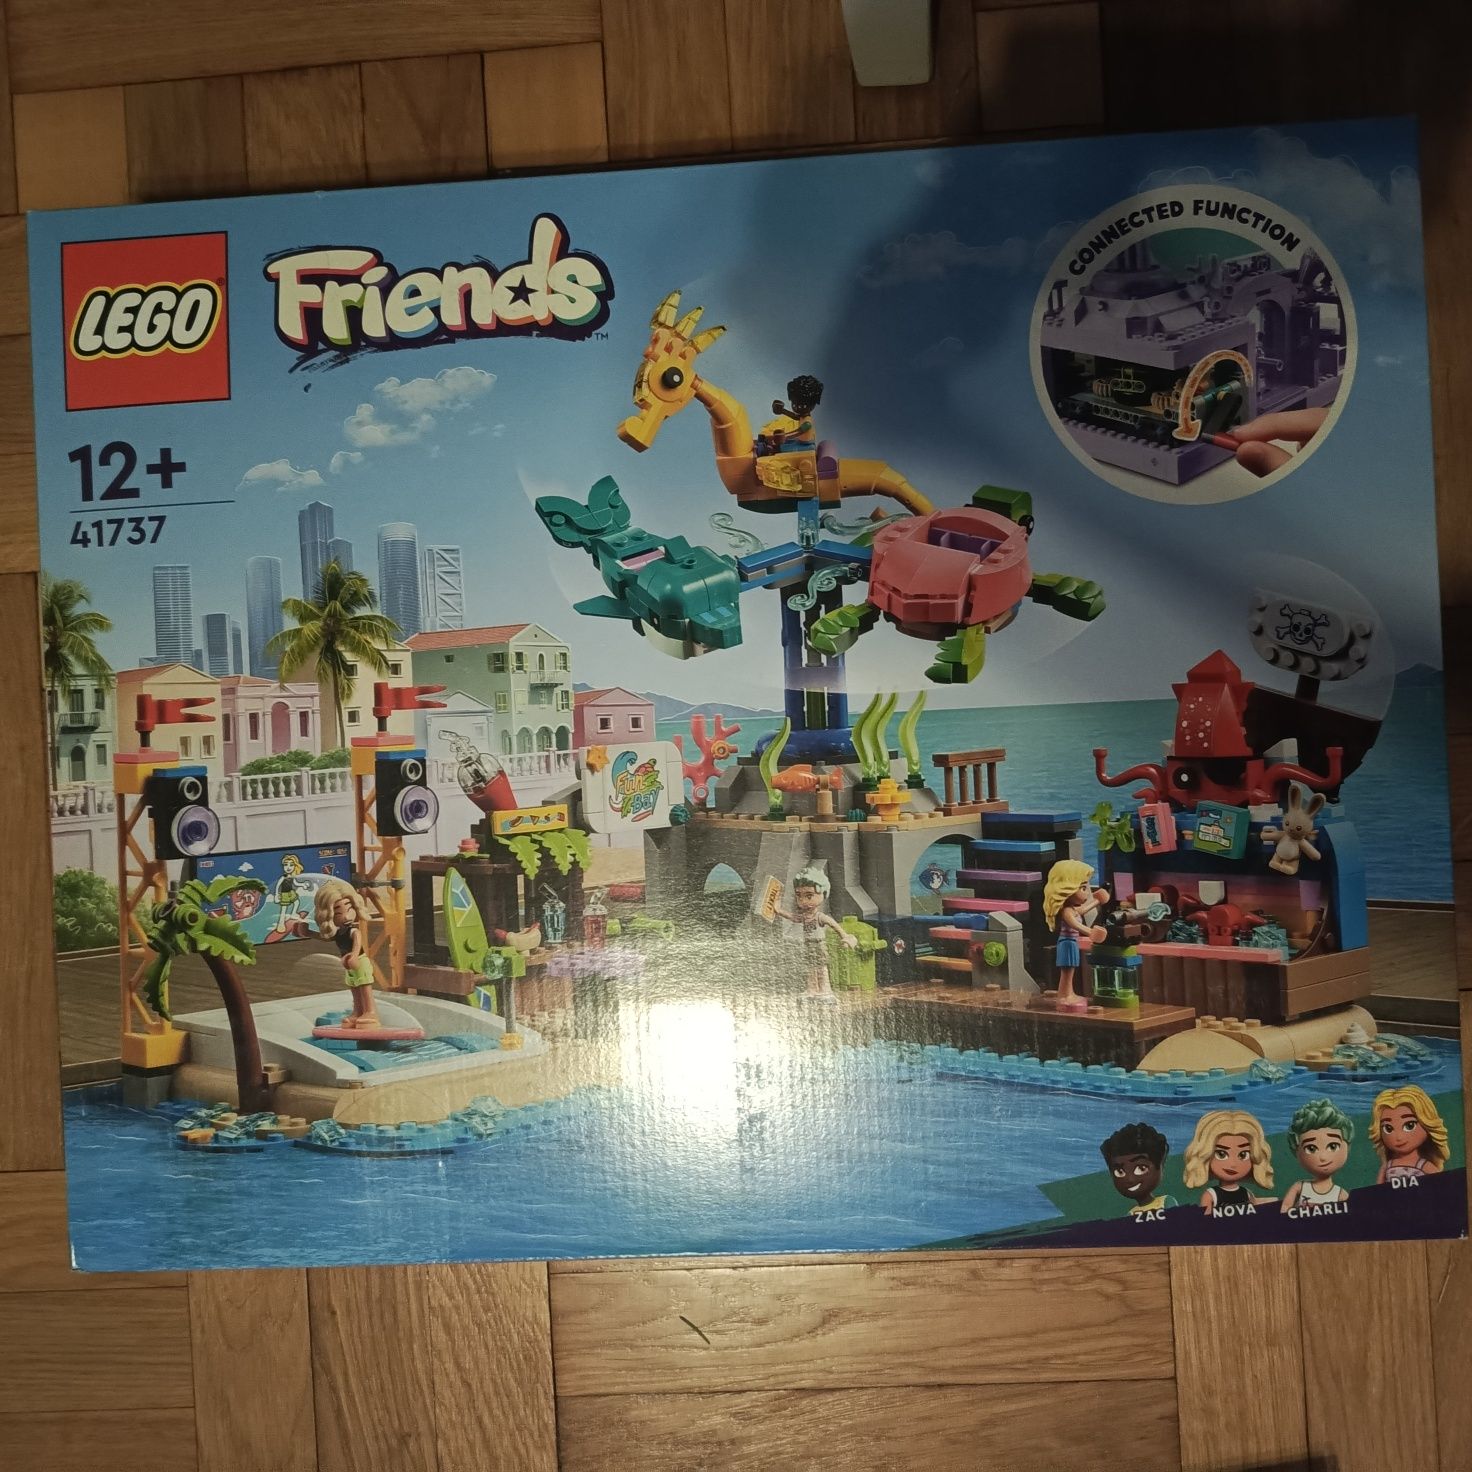 LEGO friends 41737